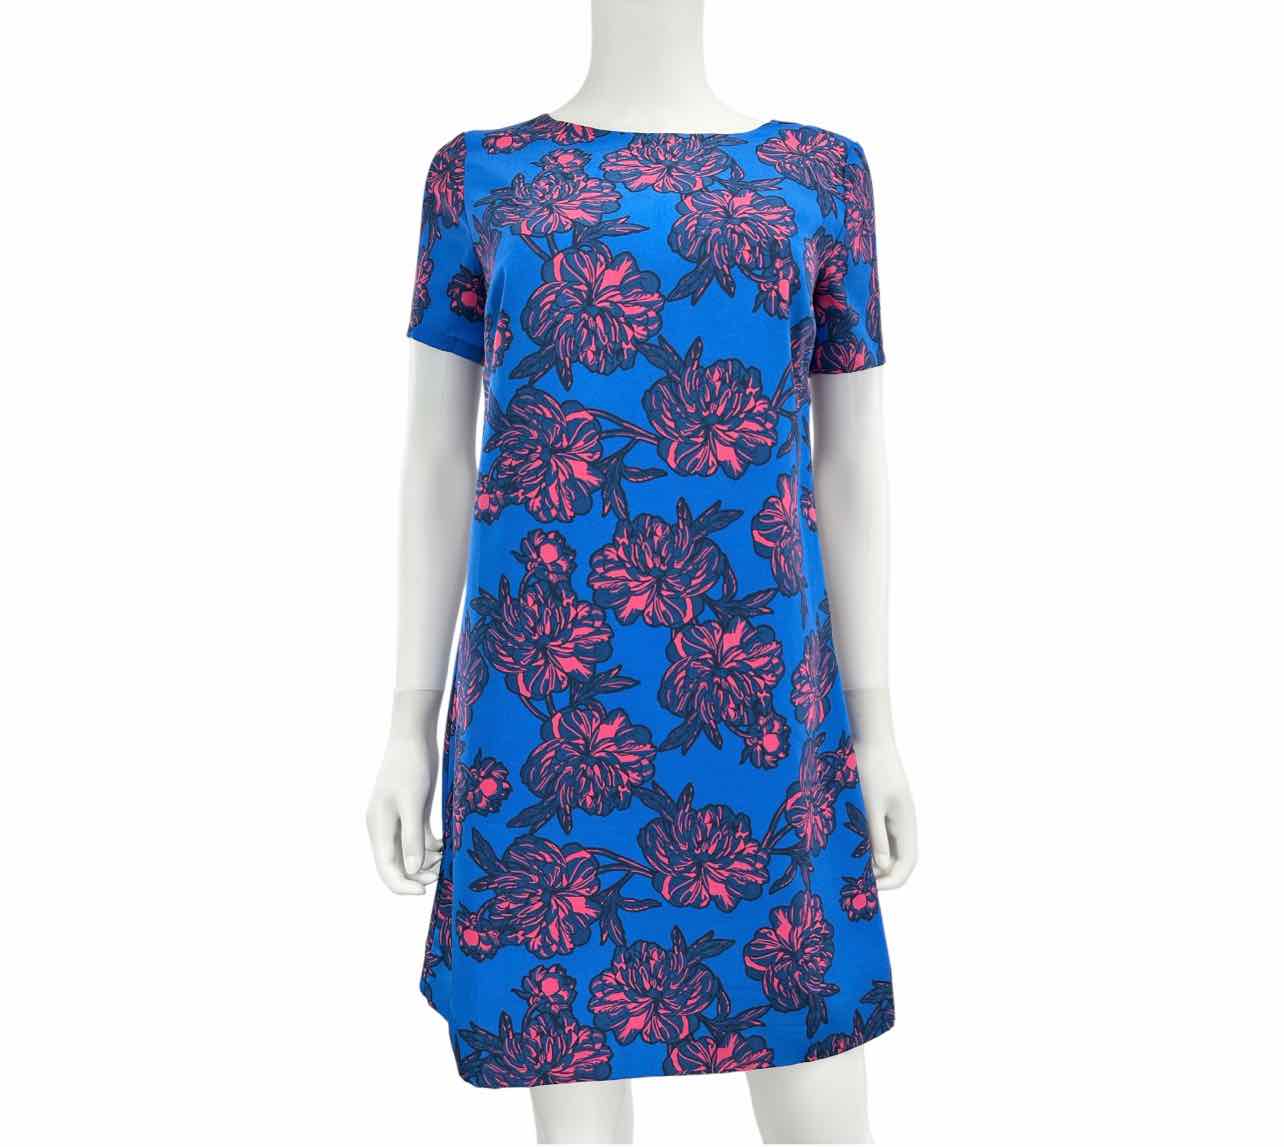 J. Crew Blue Floral Print Shift Dress Size 2